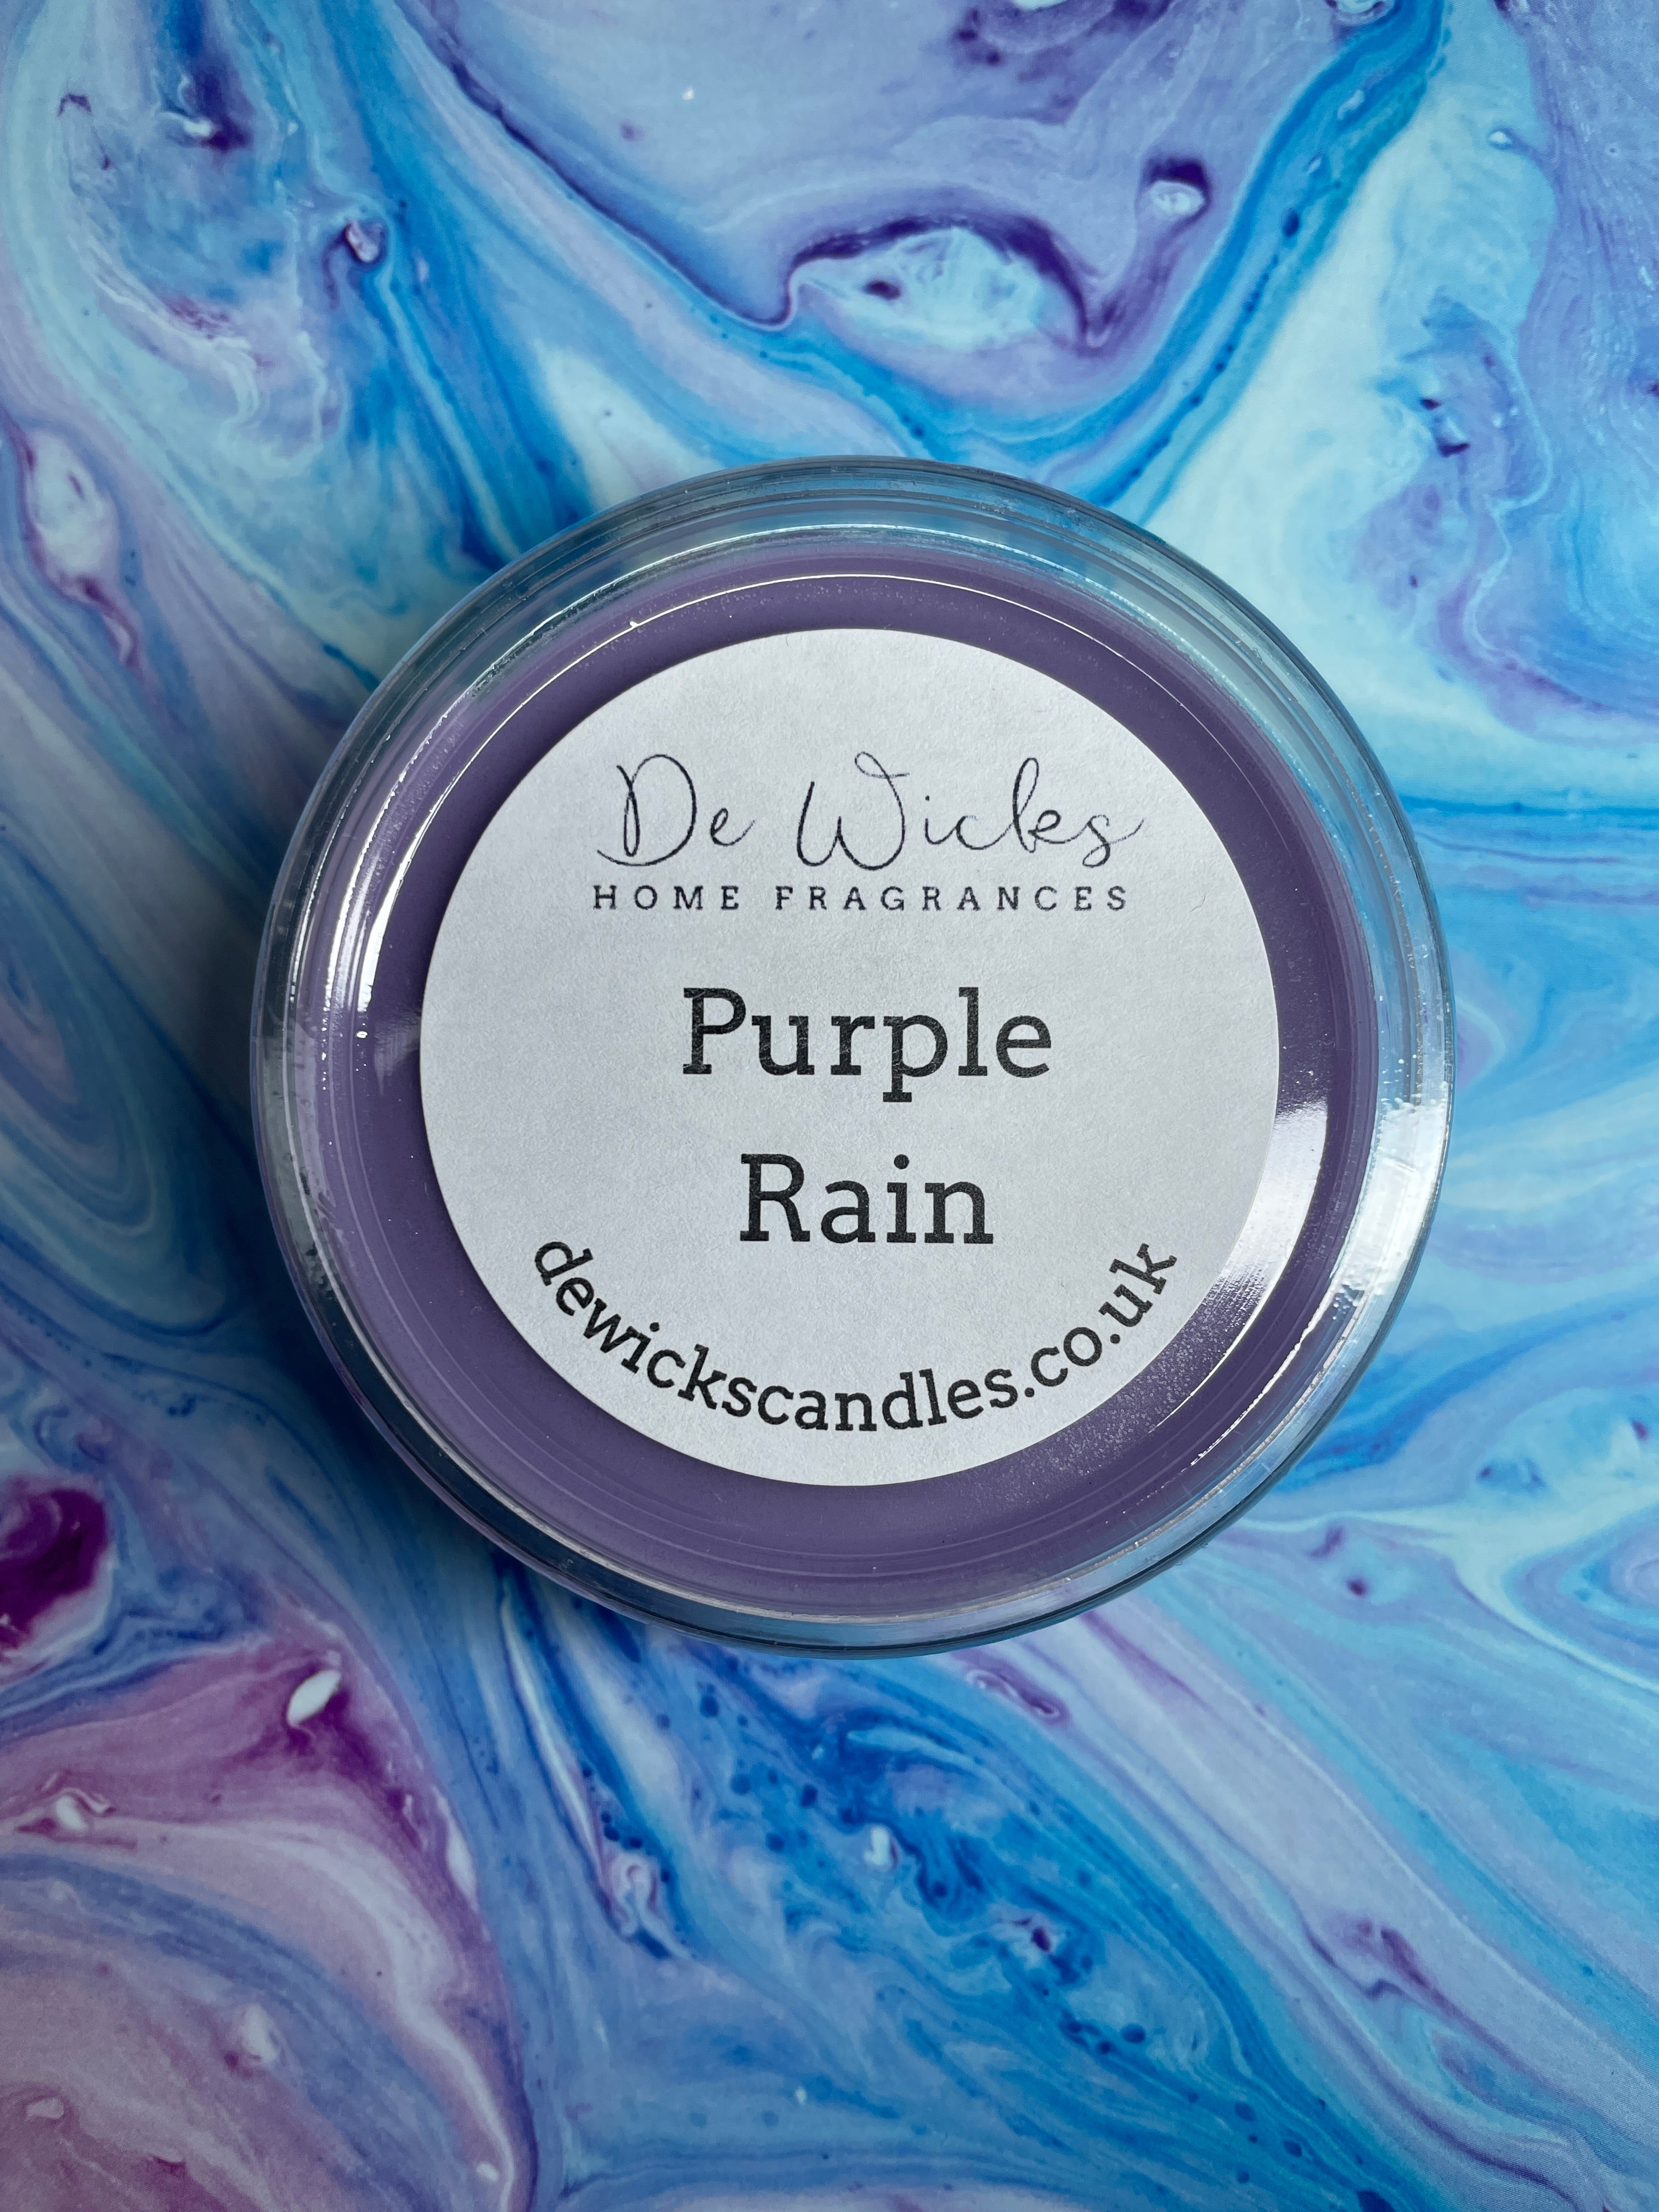 Purple Rain - De Wicks Home Fragrances